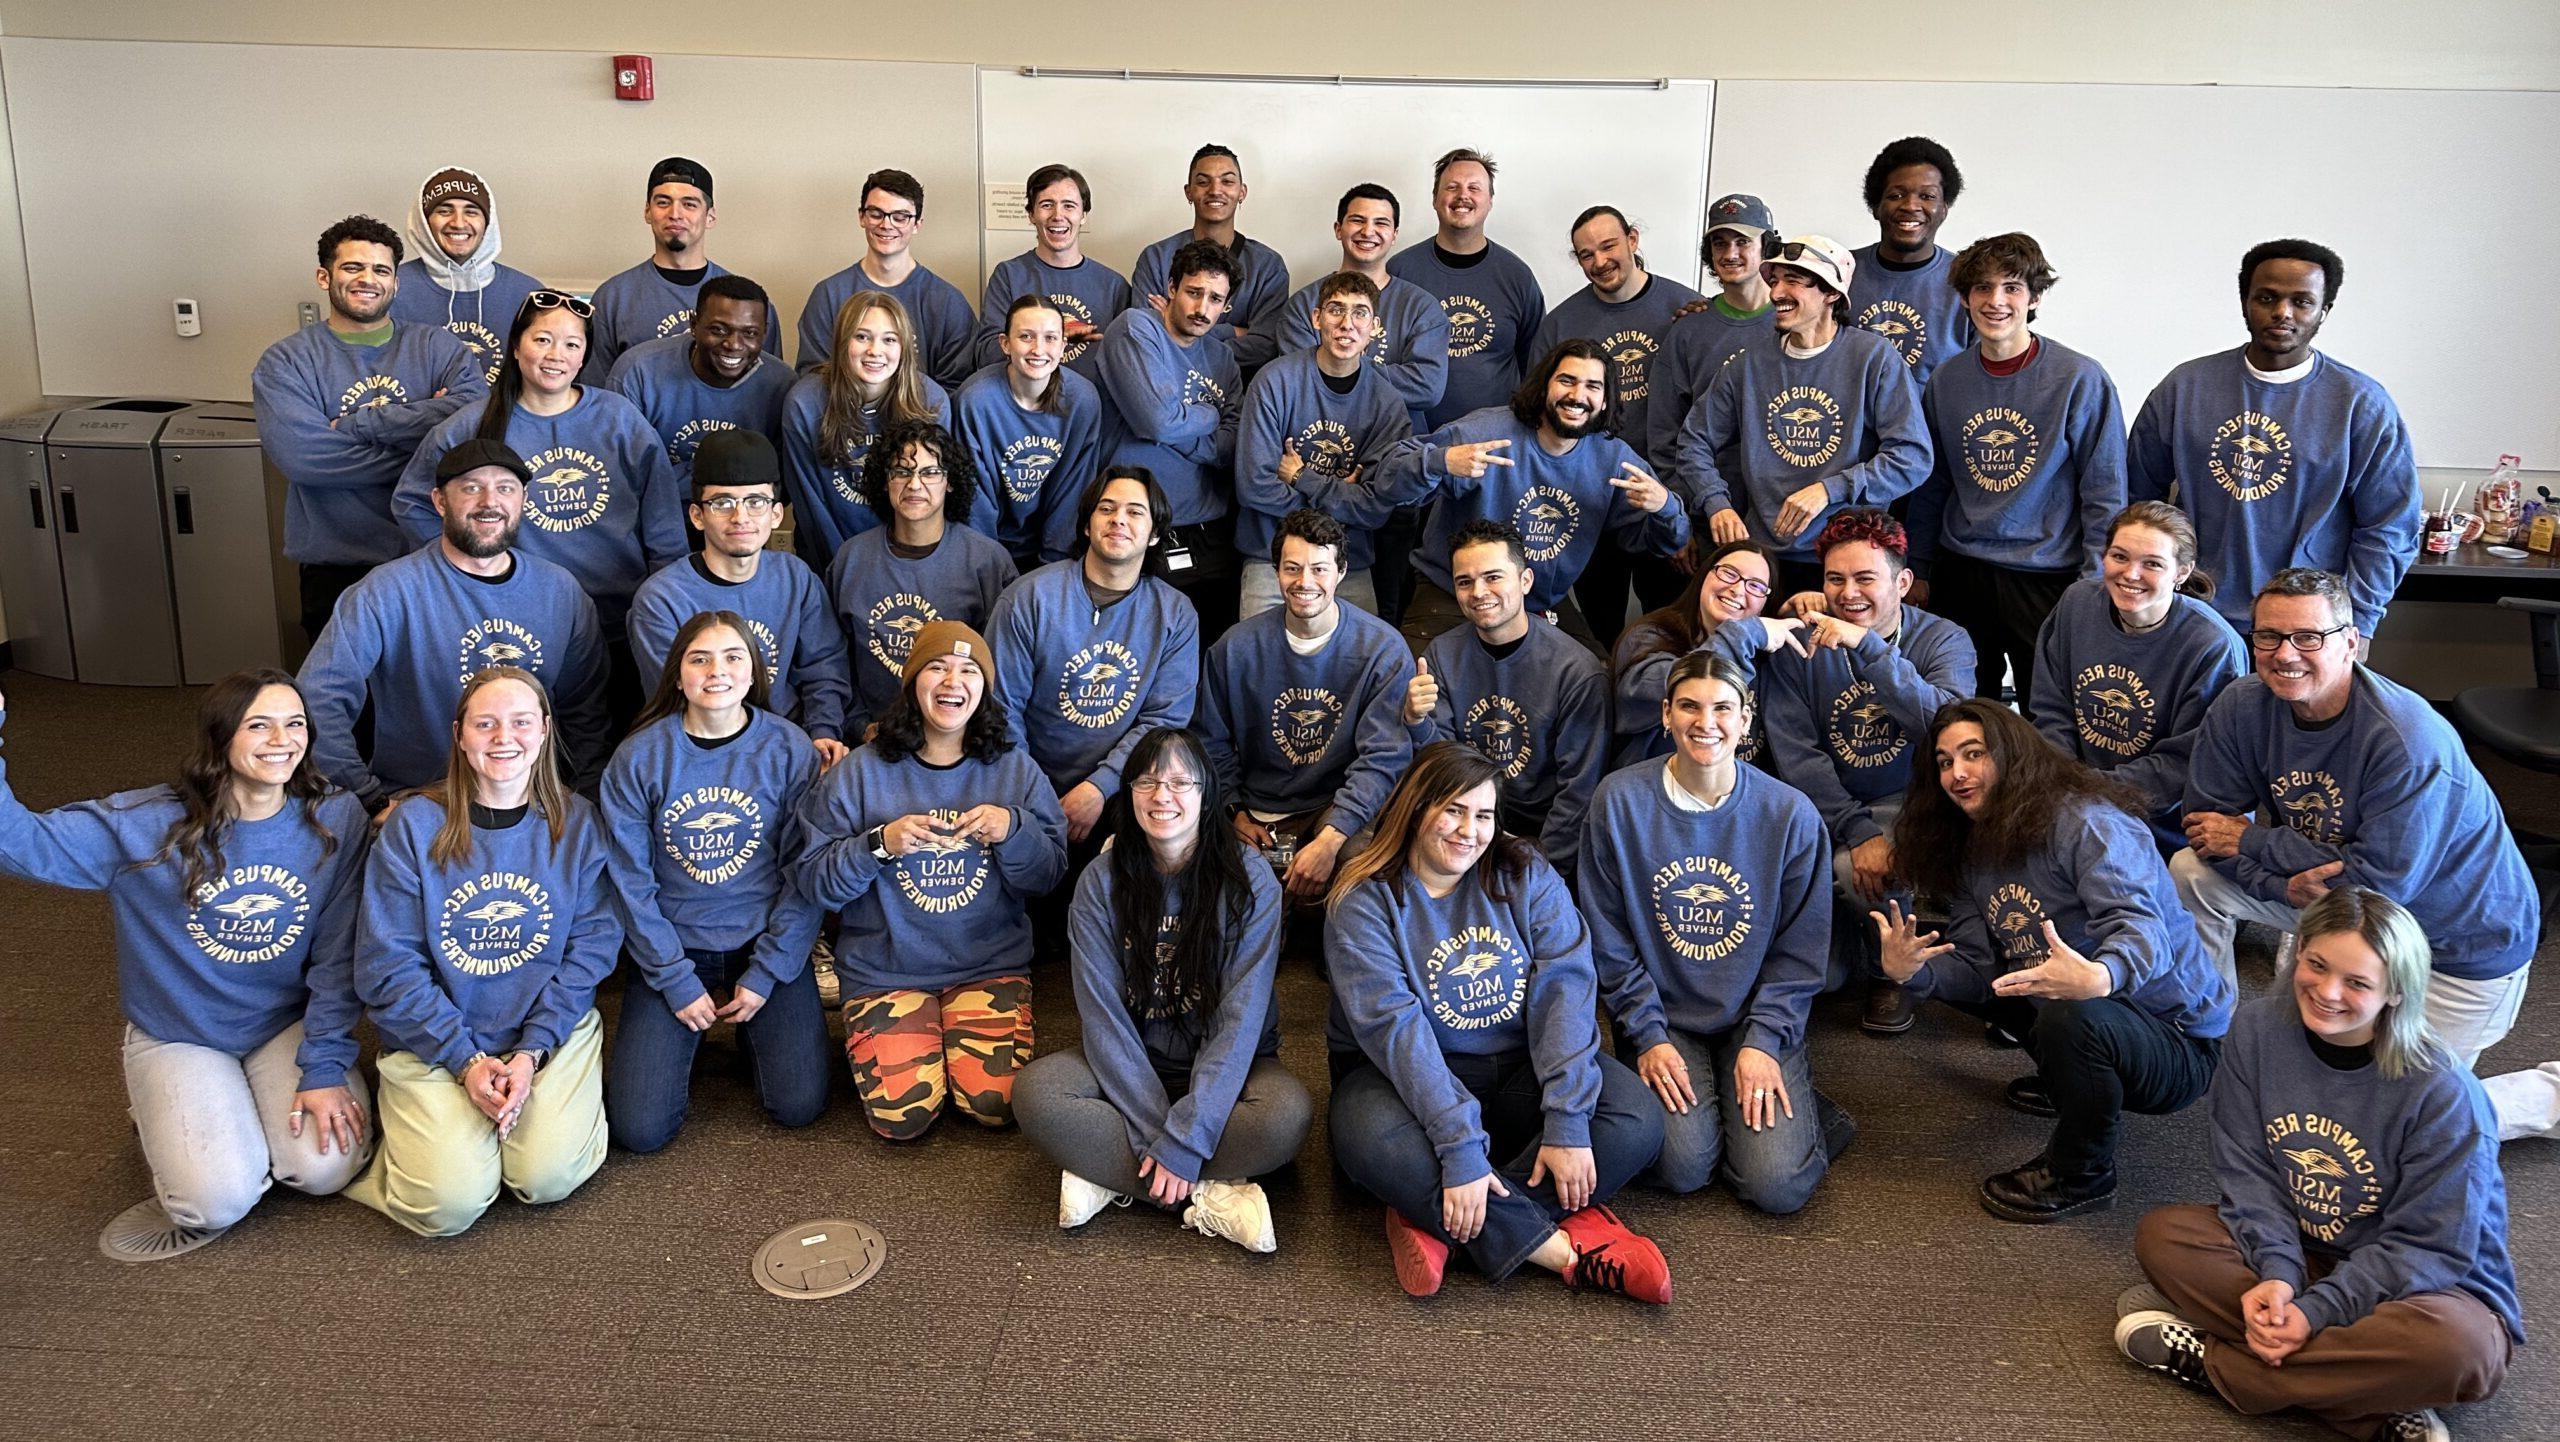 group photo of Campus Recreation staff wearing matching blue sweatshirts